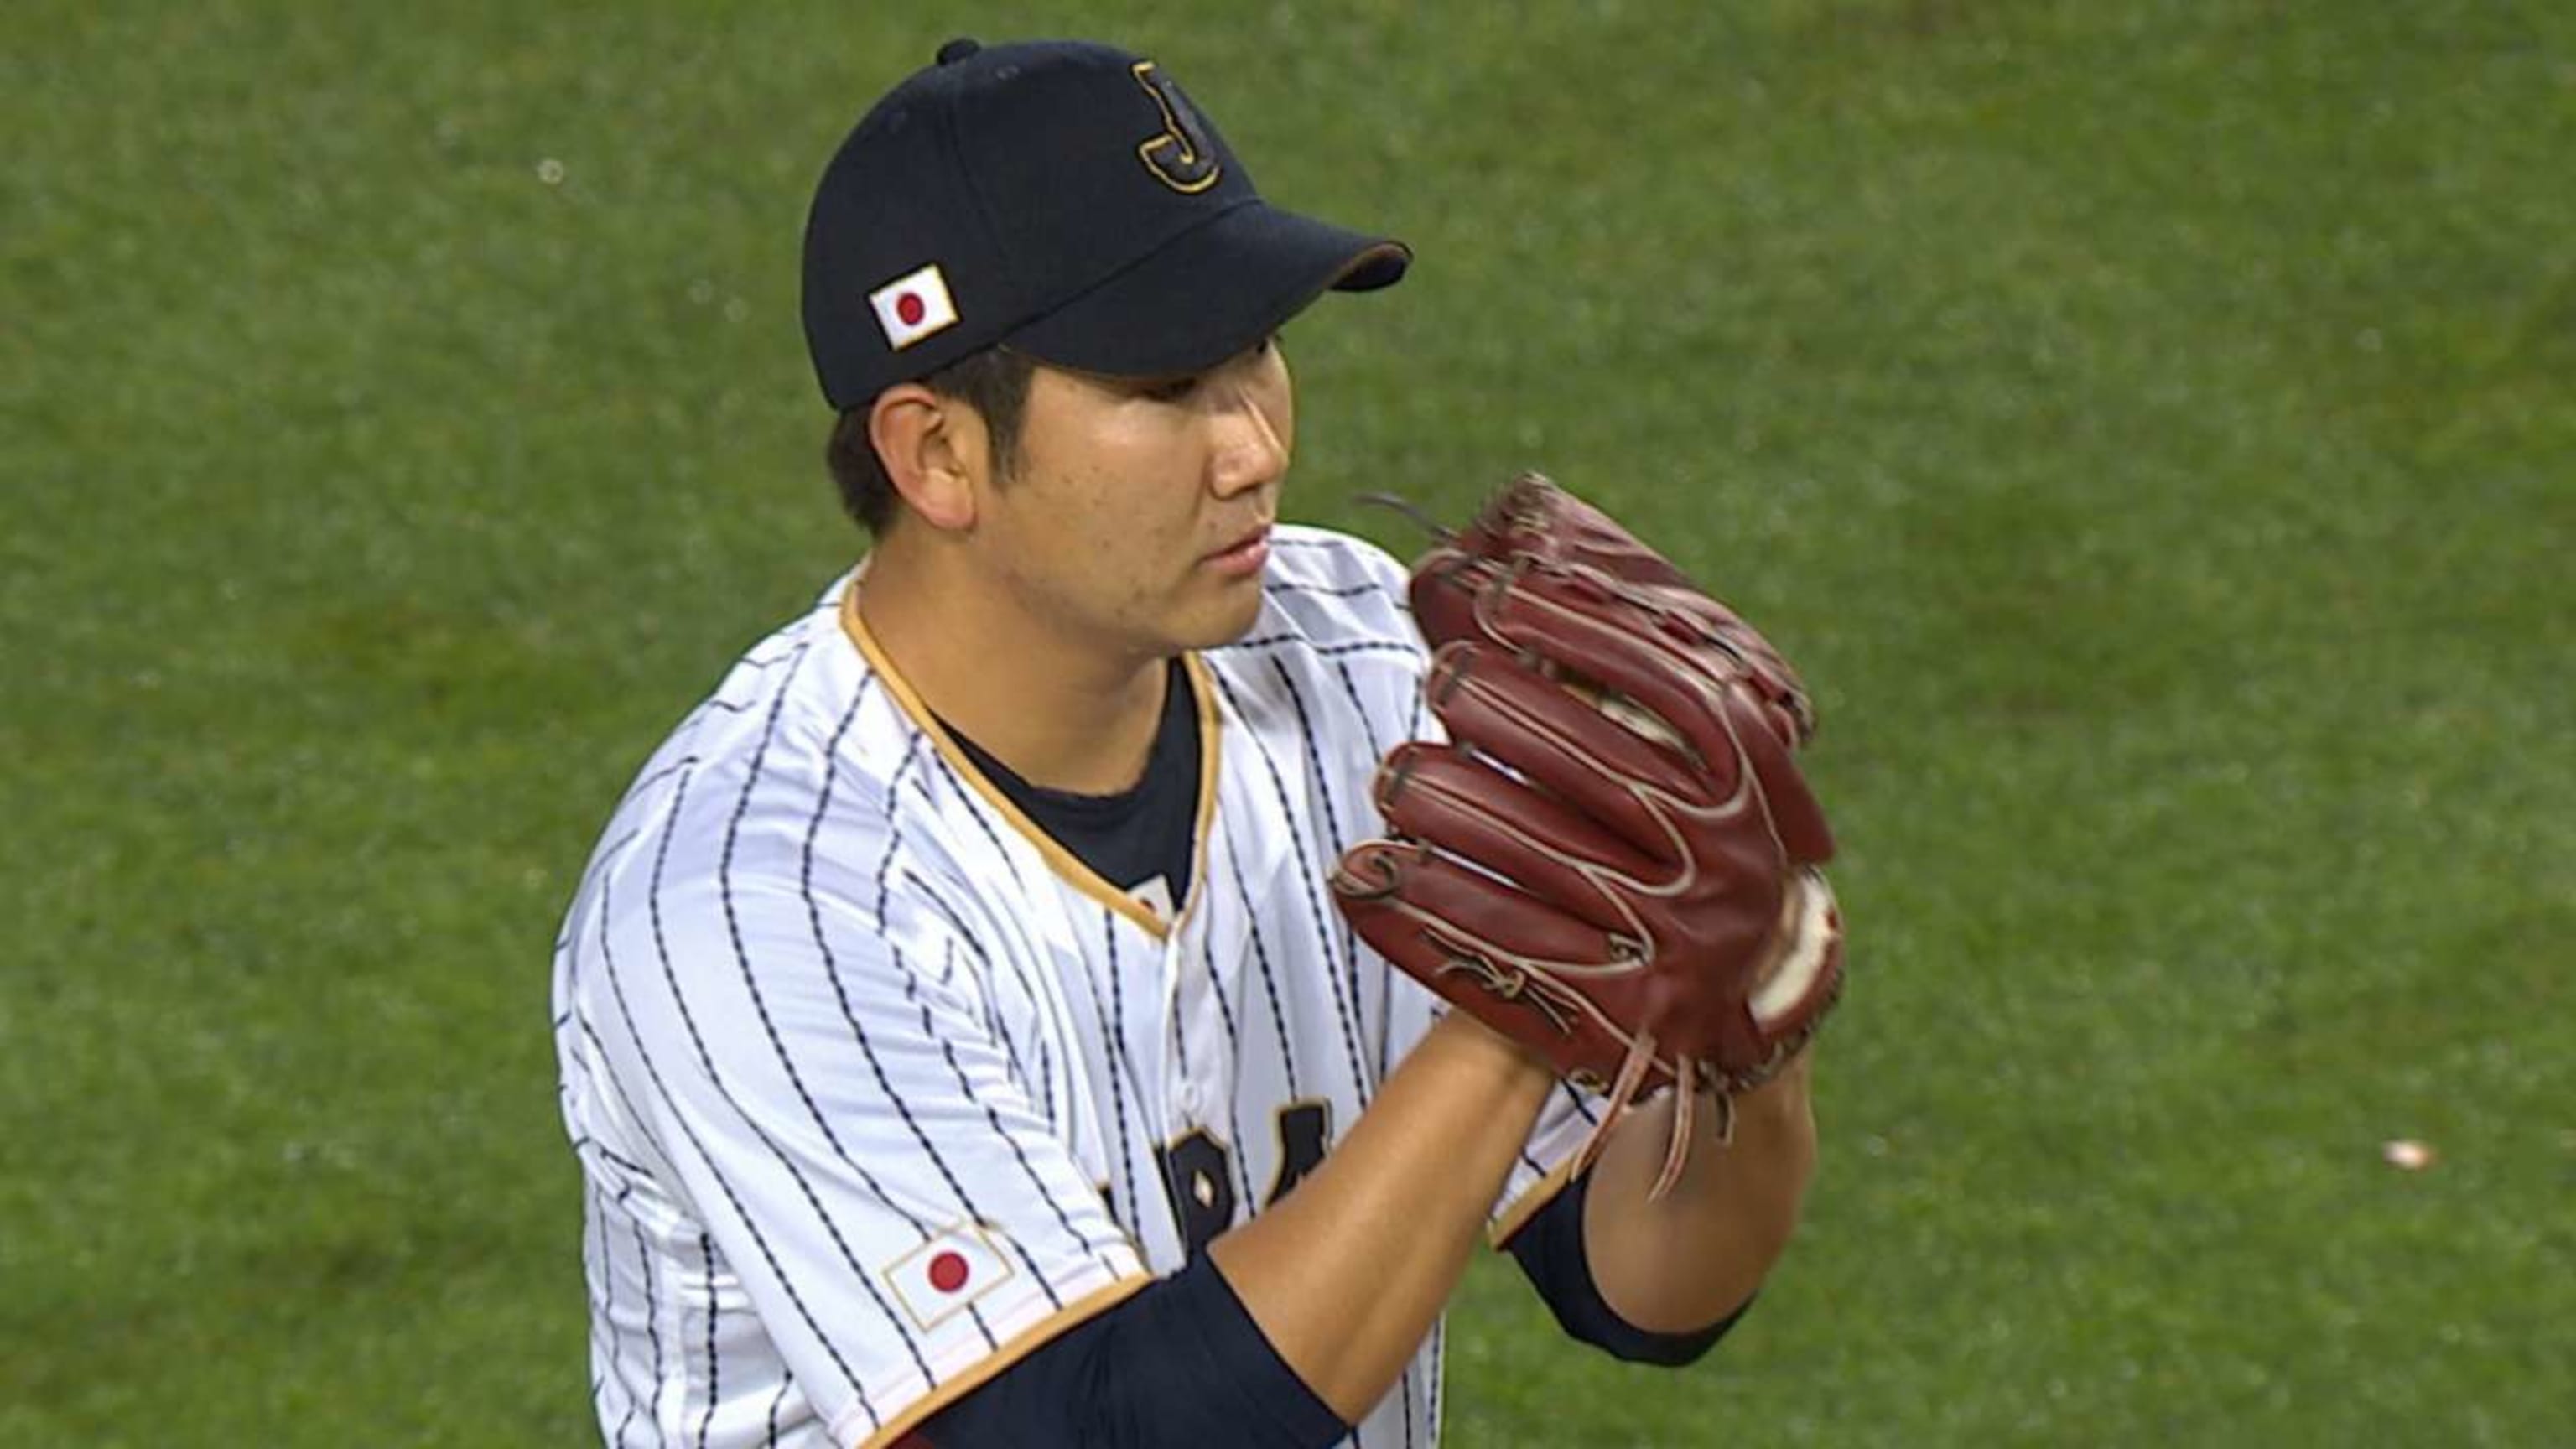 Tomoyuki Sugano posted by Japanese team Yomiuri Giants